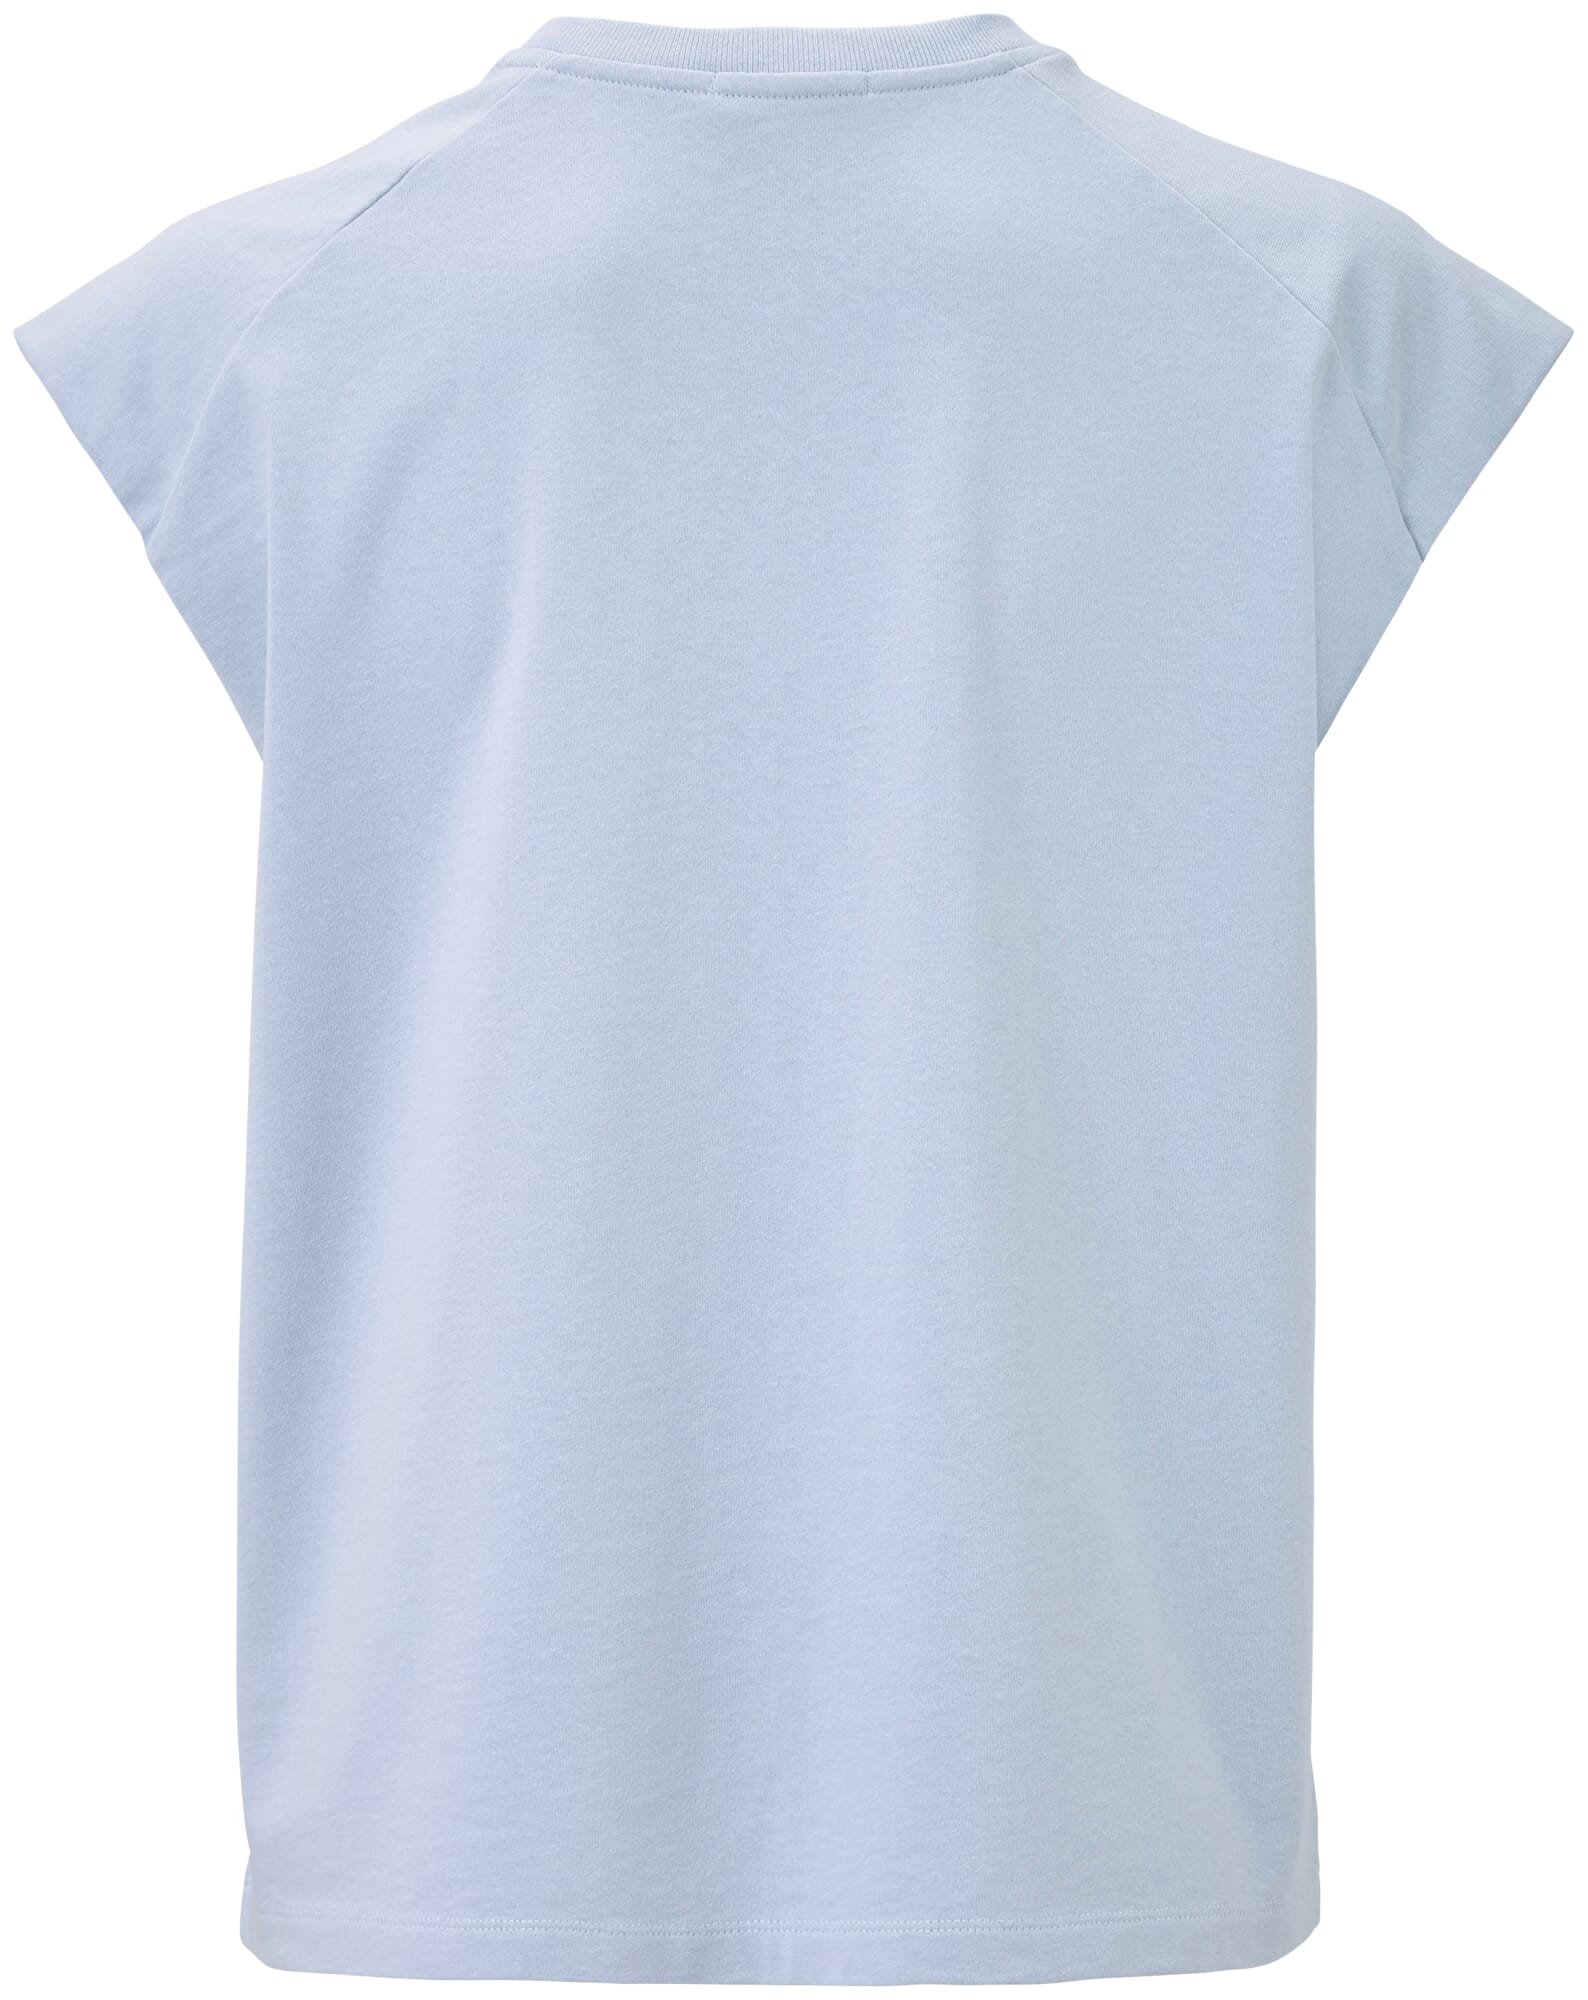 Damen-T-Shirt Baumwolle, Bleu | Manufactum